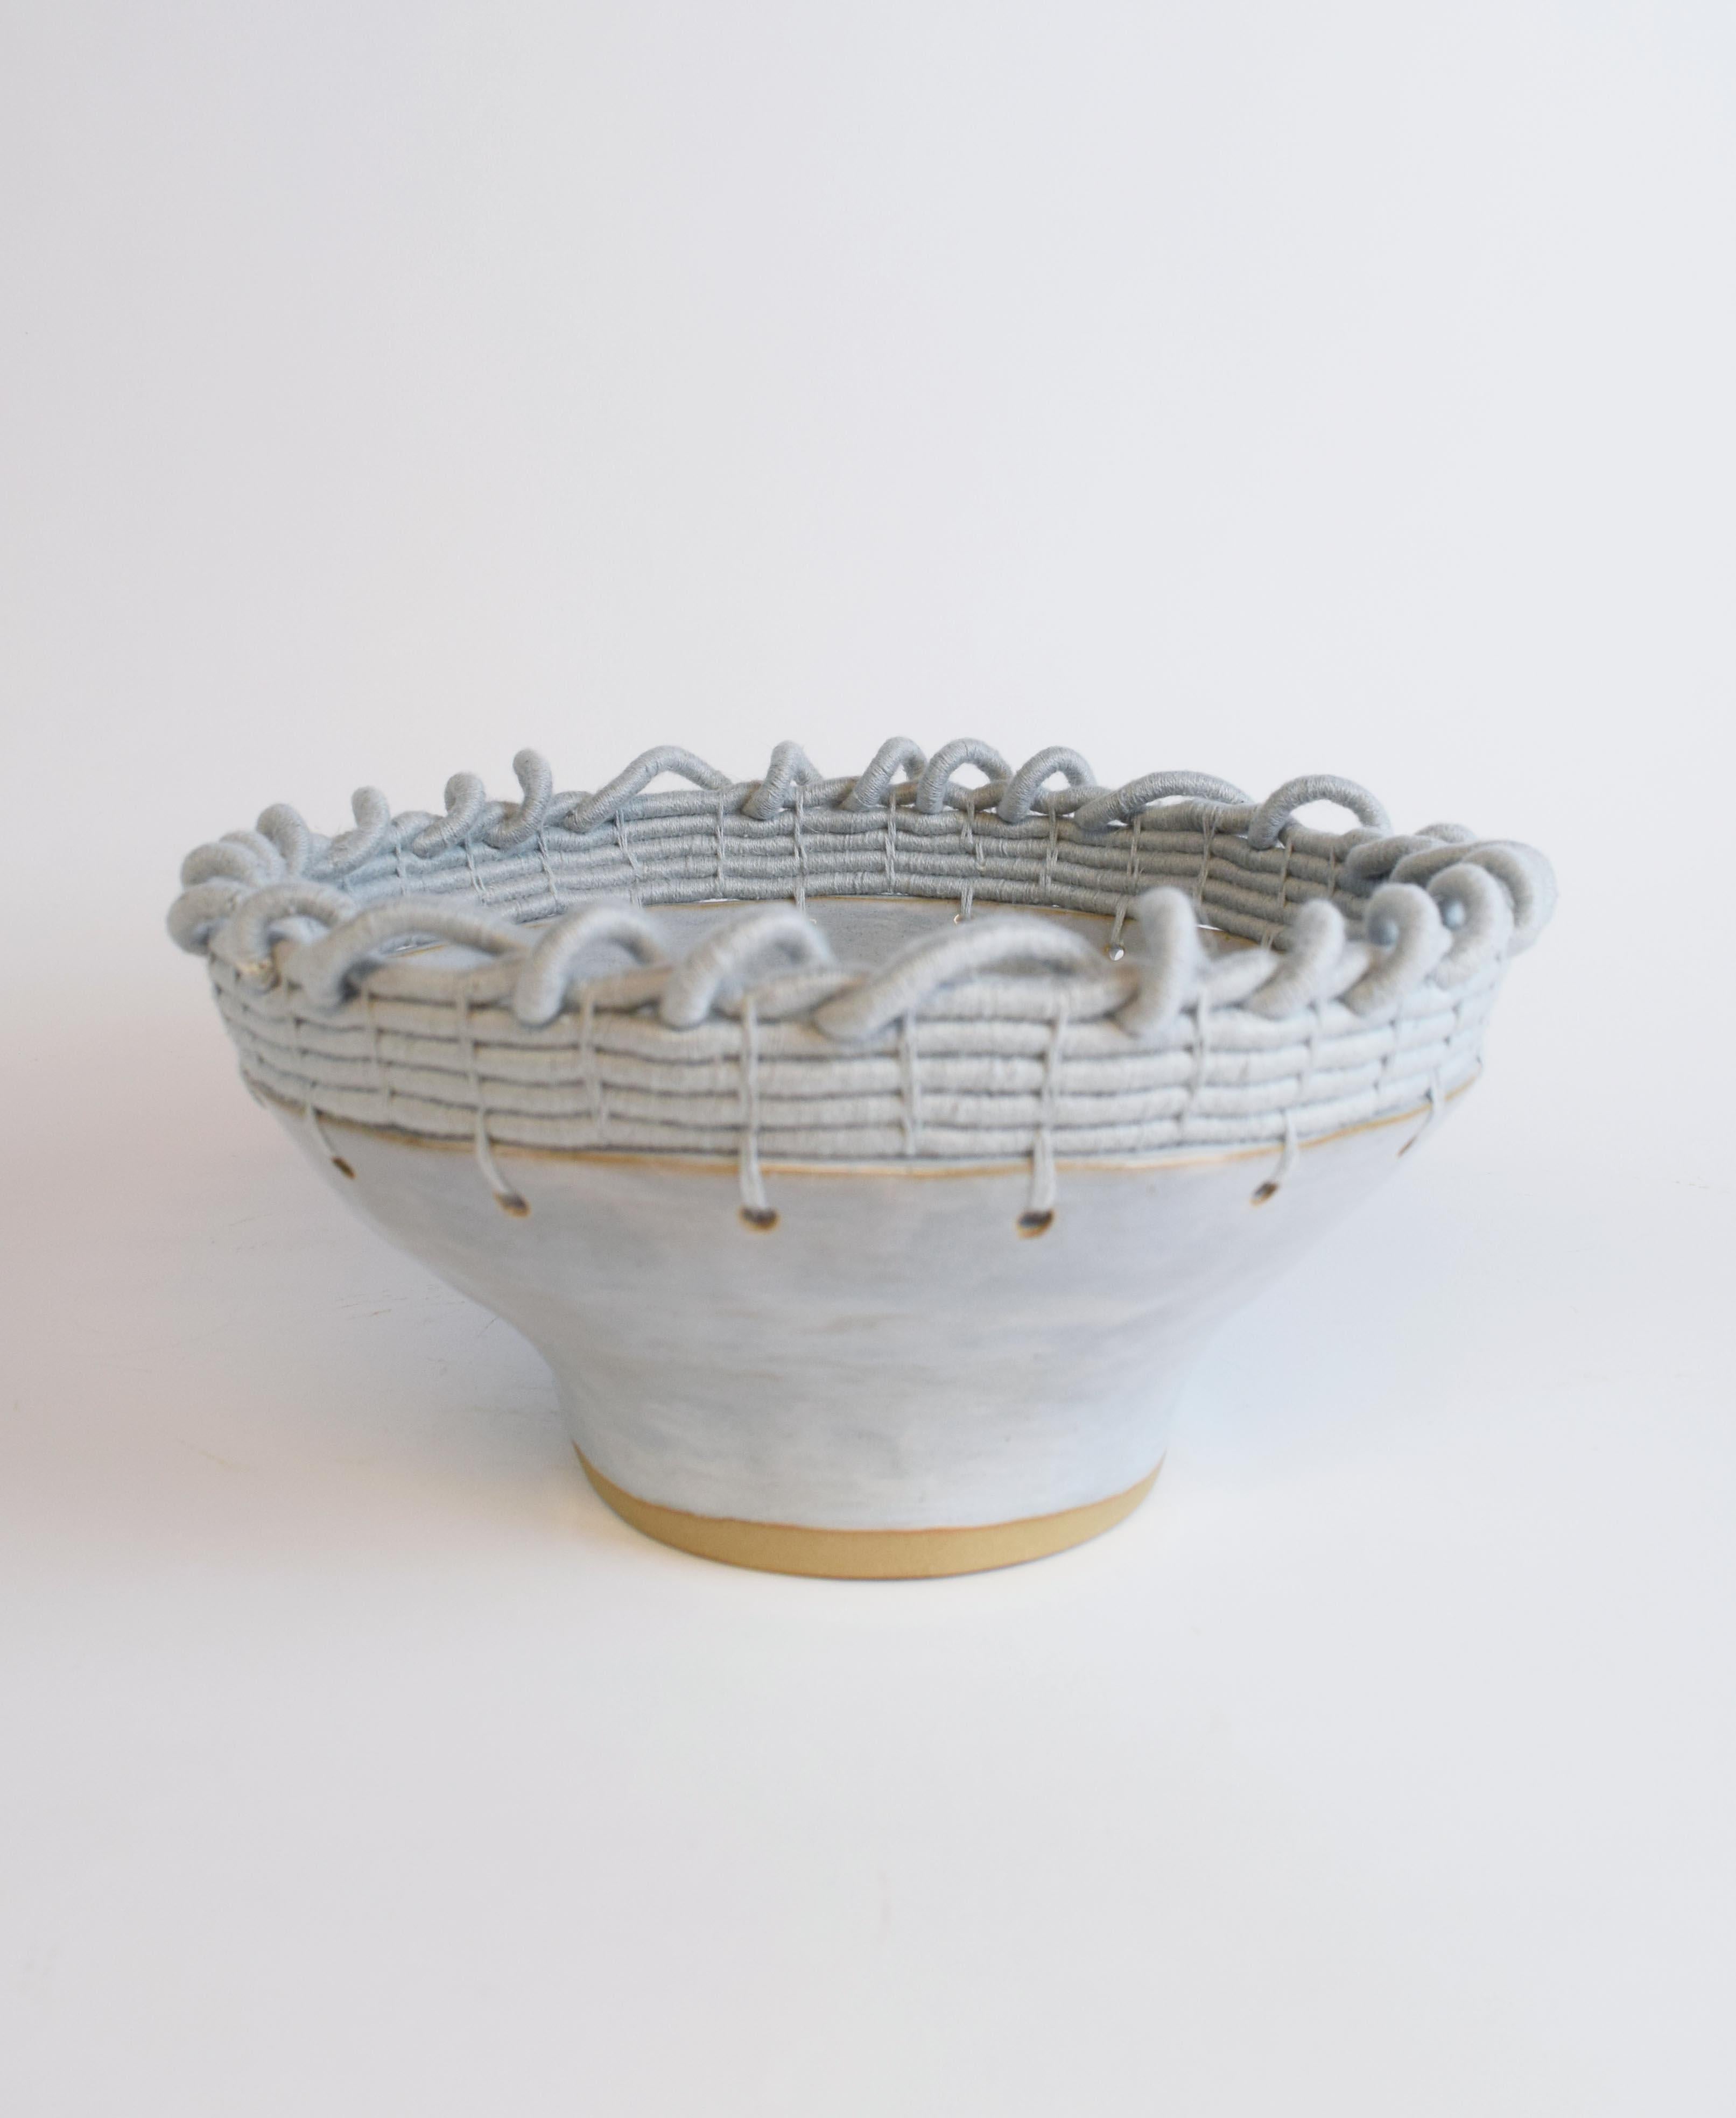 Organic Modern One of a Kind Handmade Ceramic Bowl #782, Light Blue Glaze & Woven Cotton Upper